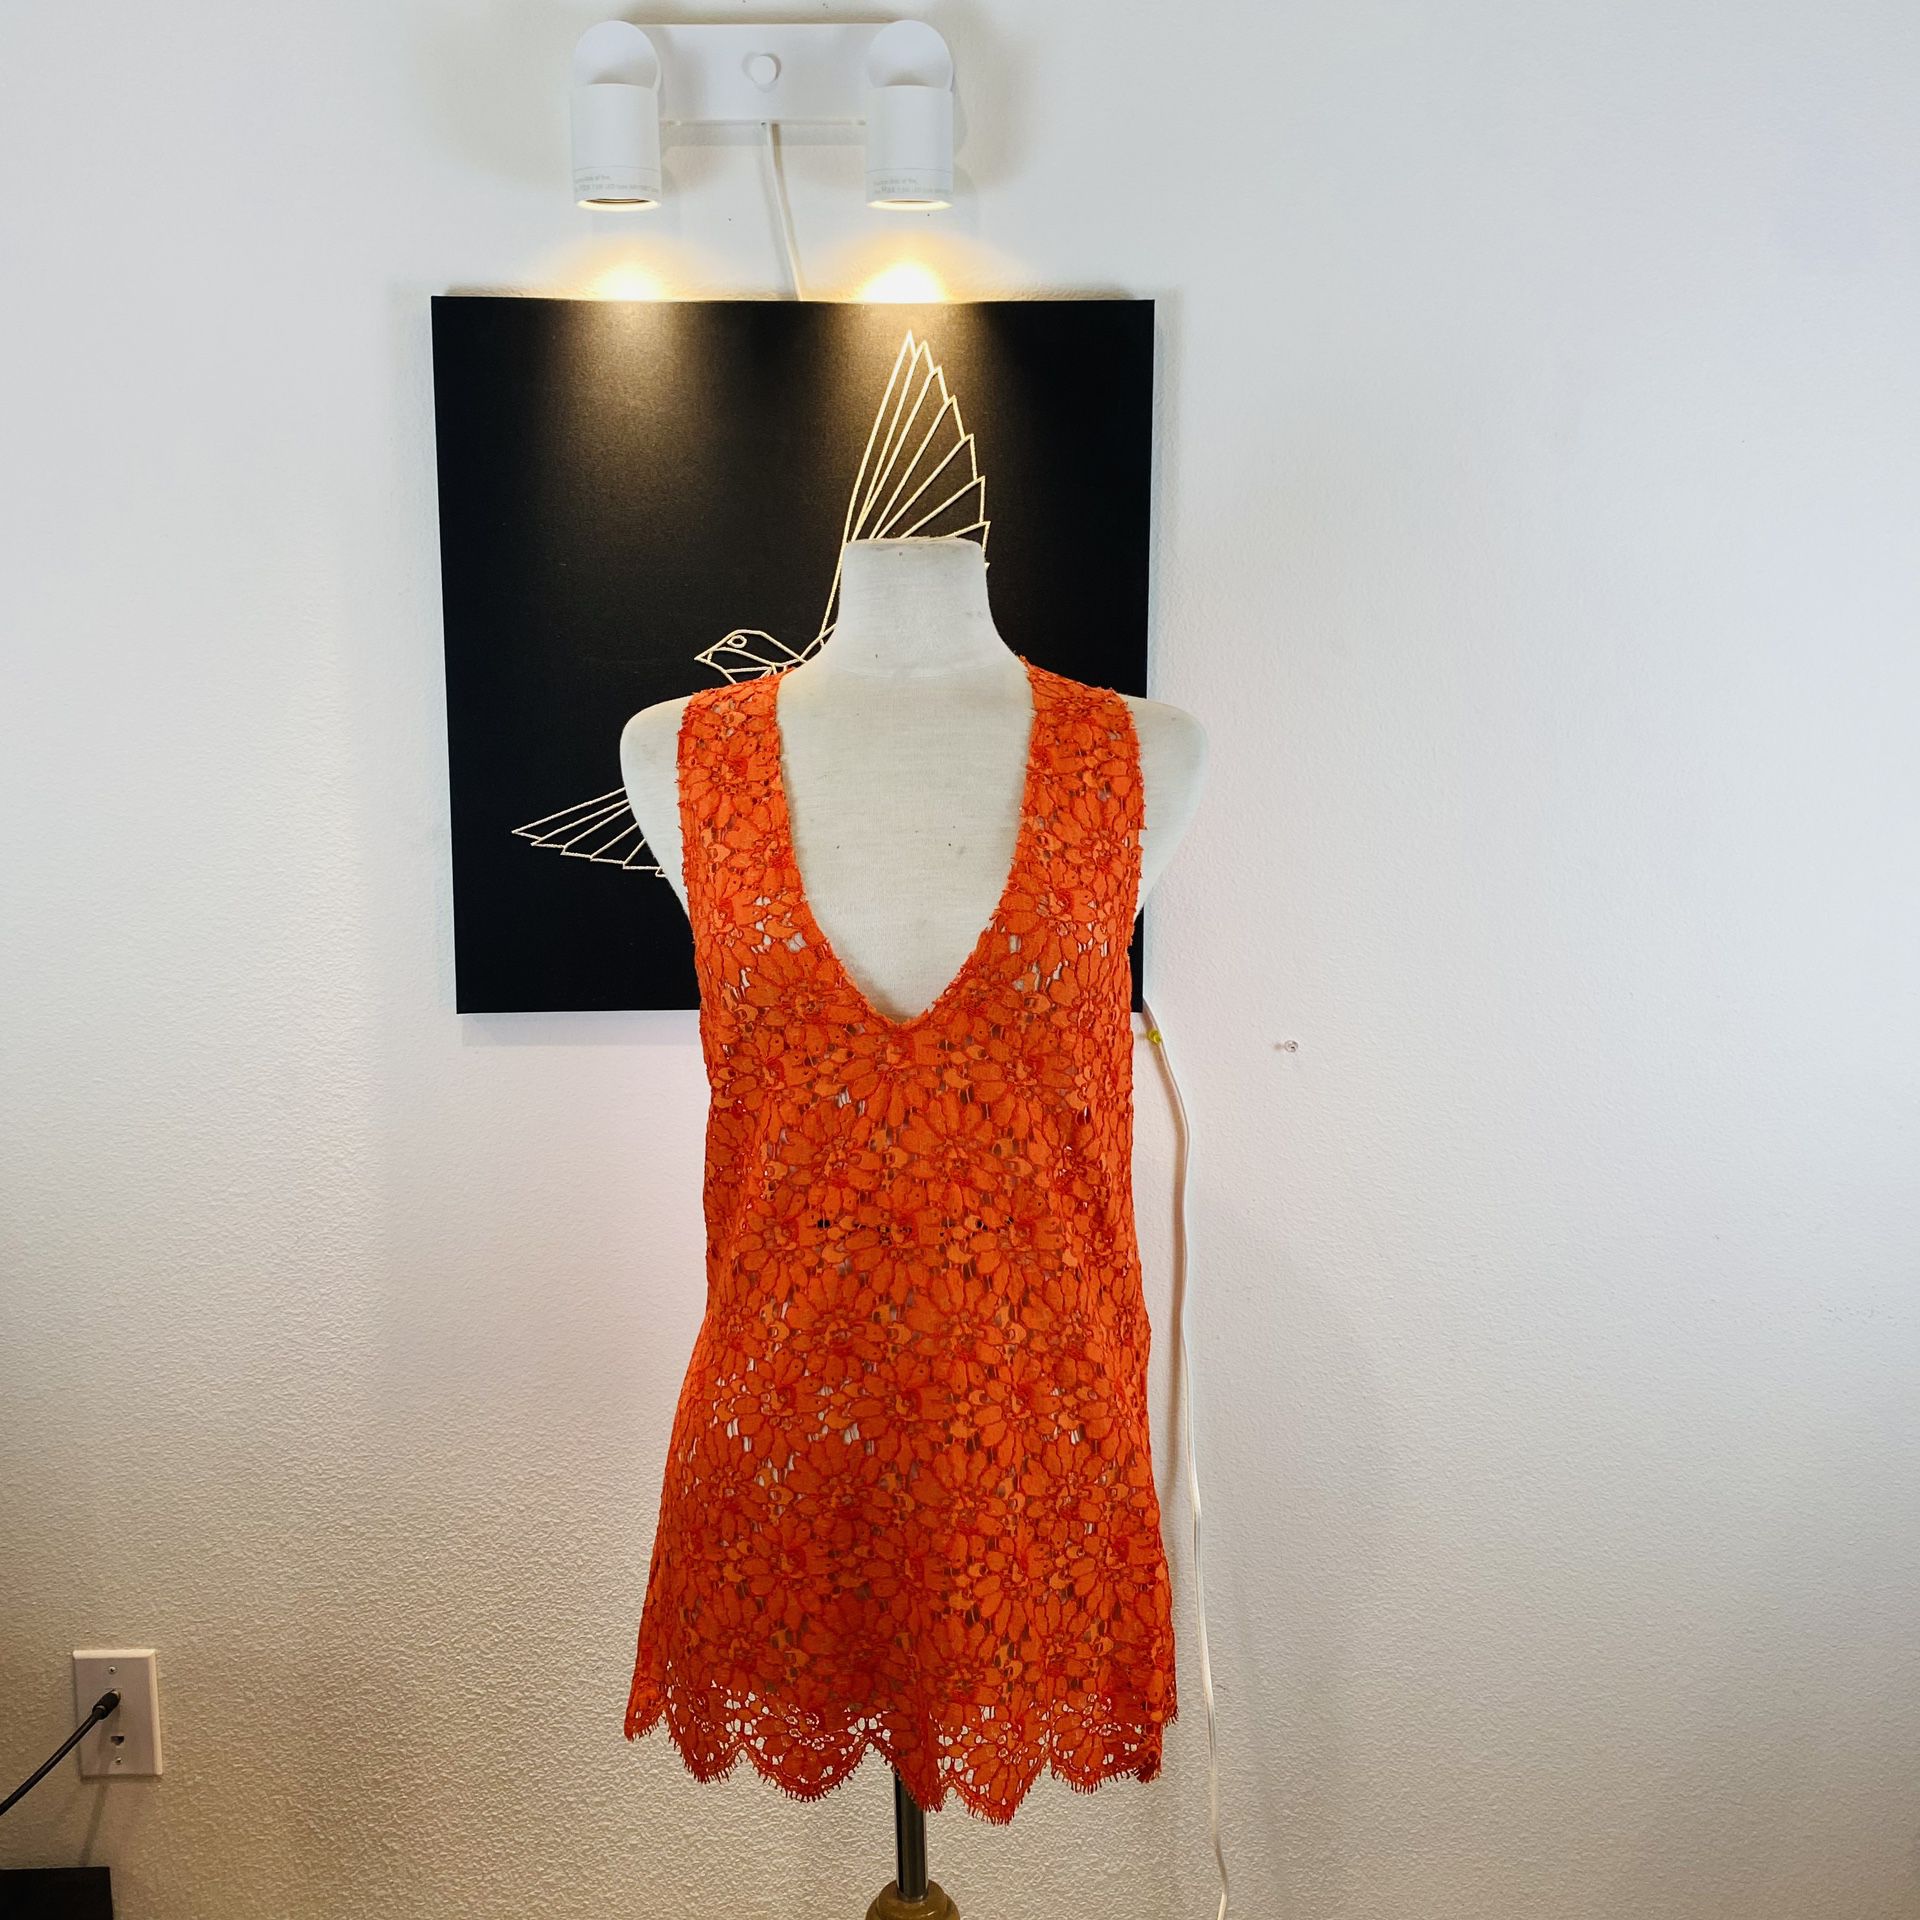 Gucci Women Flower Floral Lace Sleeveless Orange Dress $1400